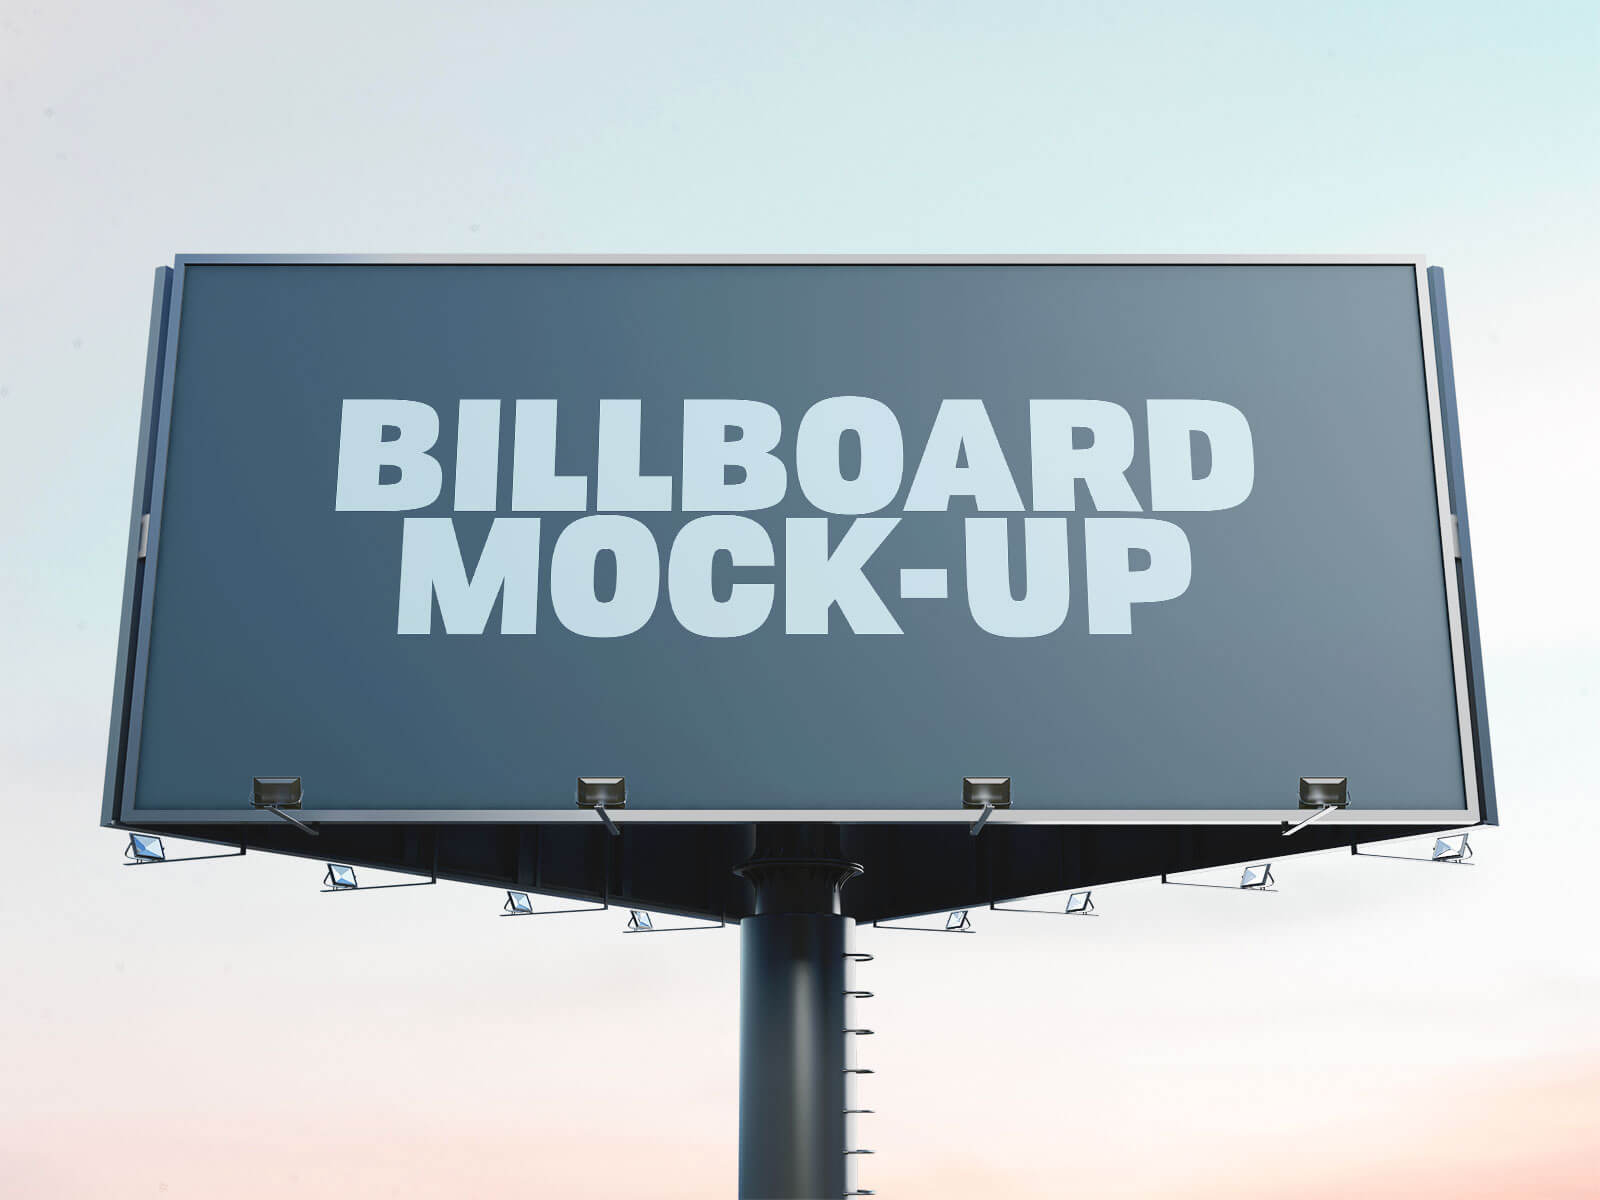 Free Trivision Advertising Billboard Mockup PSD Set (1)